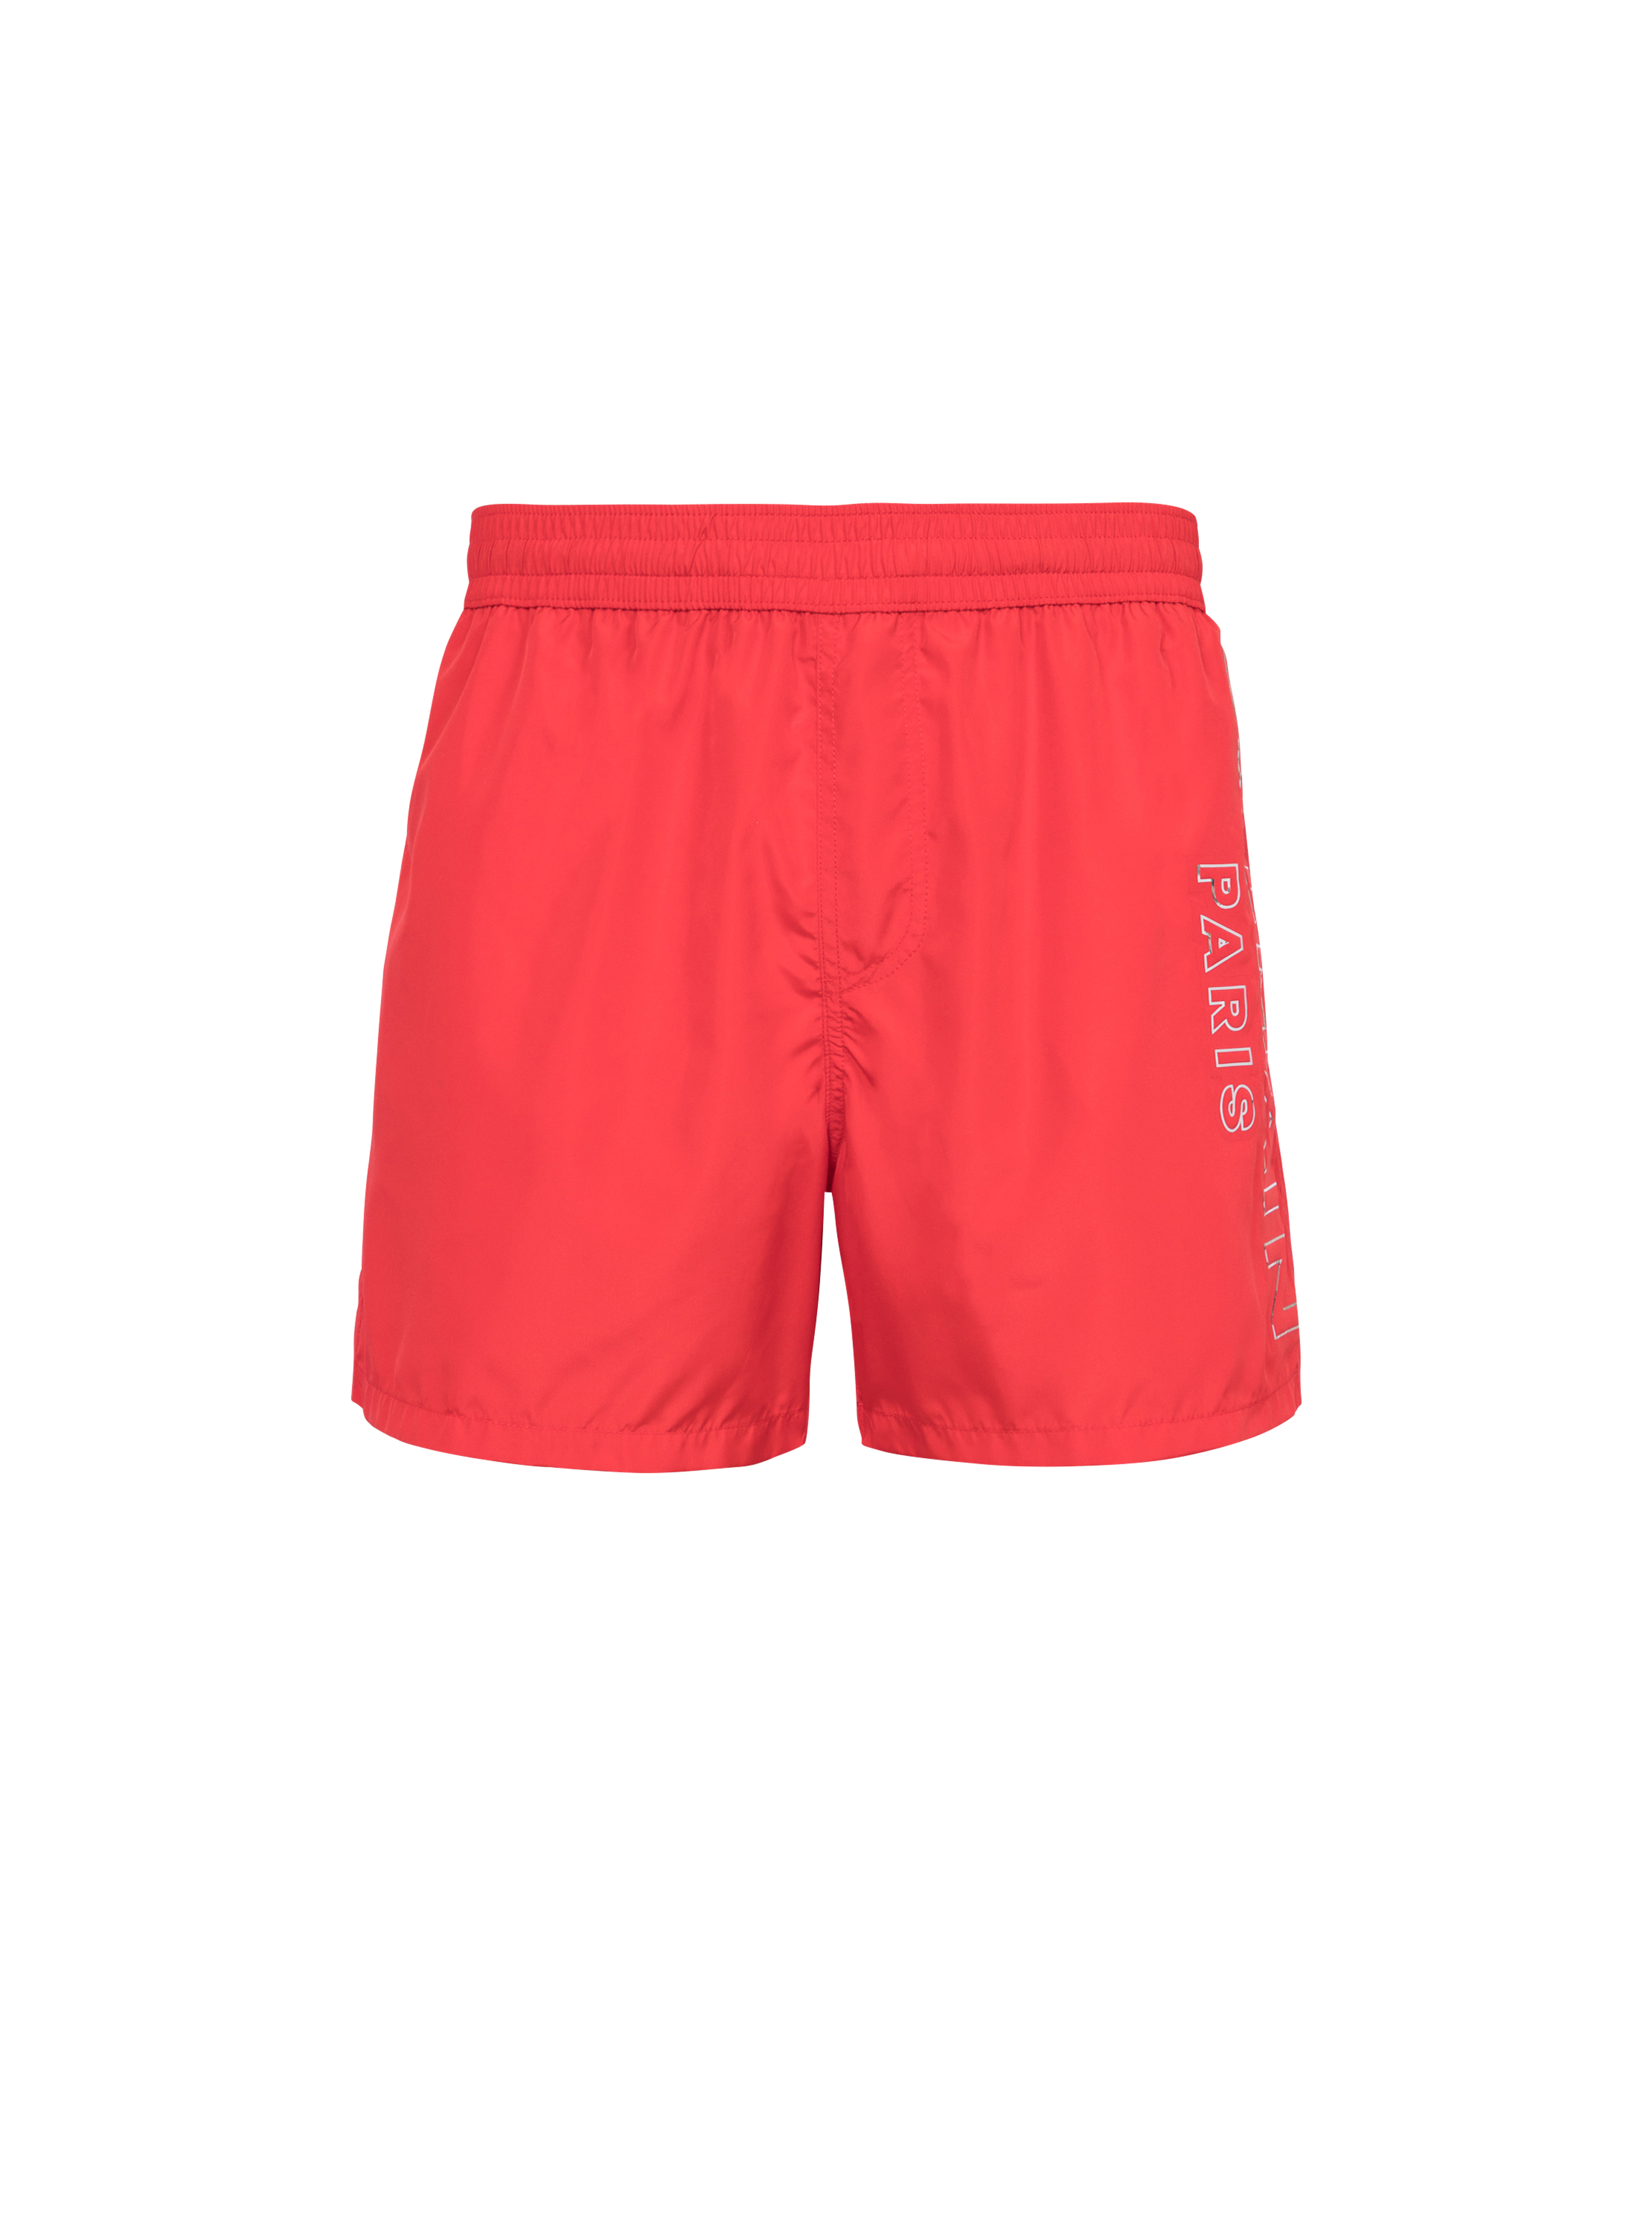 Balmain logo swim shorts, red